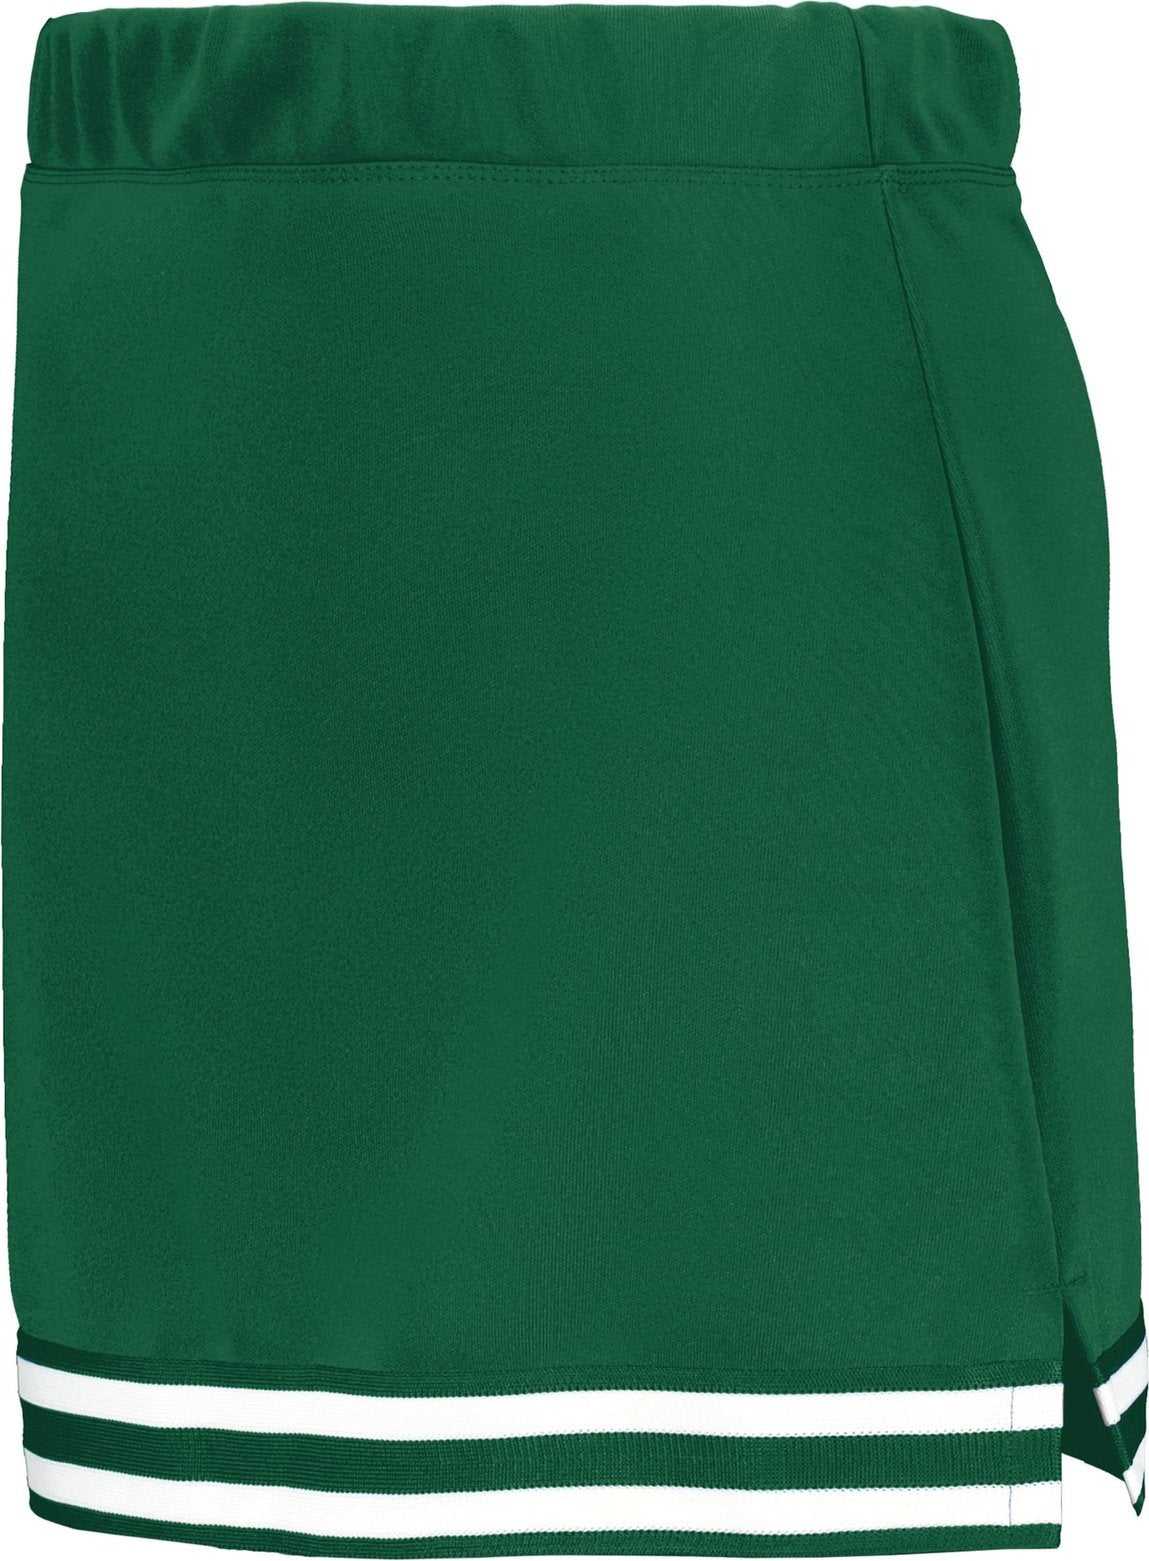 Augusta 6926 Girls Cheer Squad Skirt - Dark Green Black White - HIT a Double